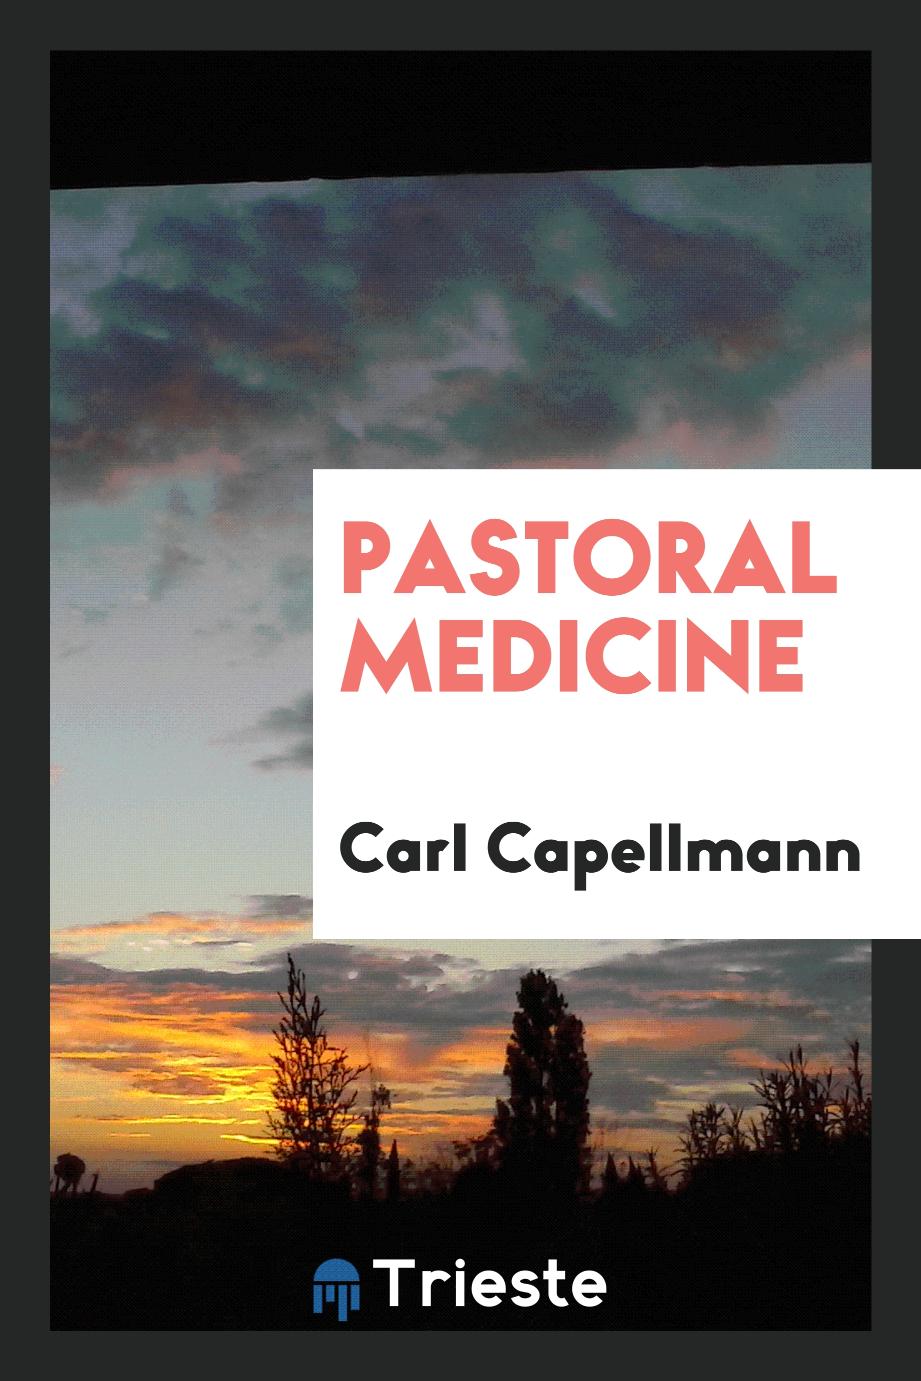 Pastoral medicine